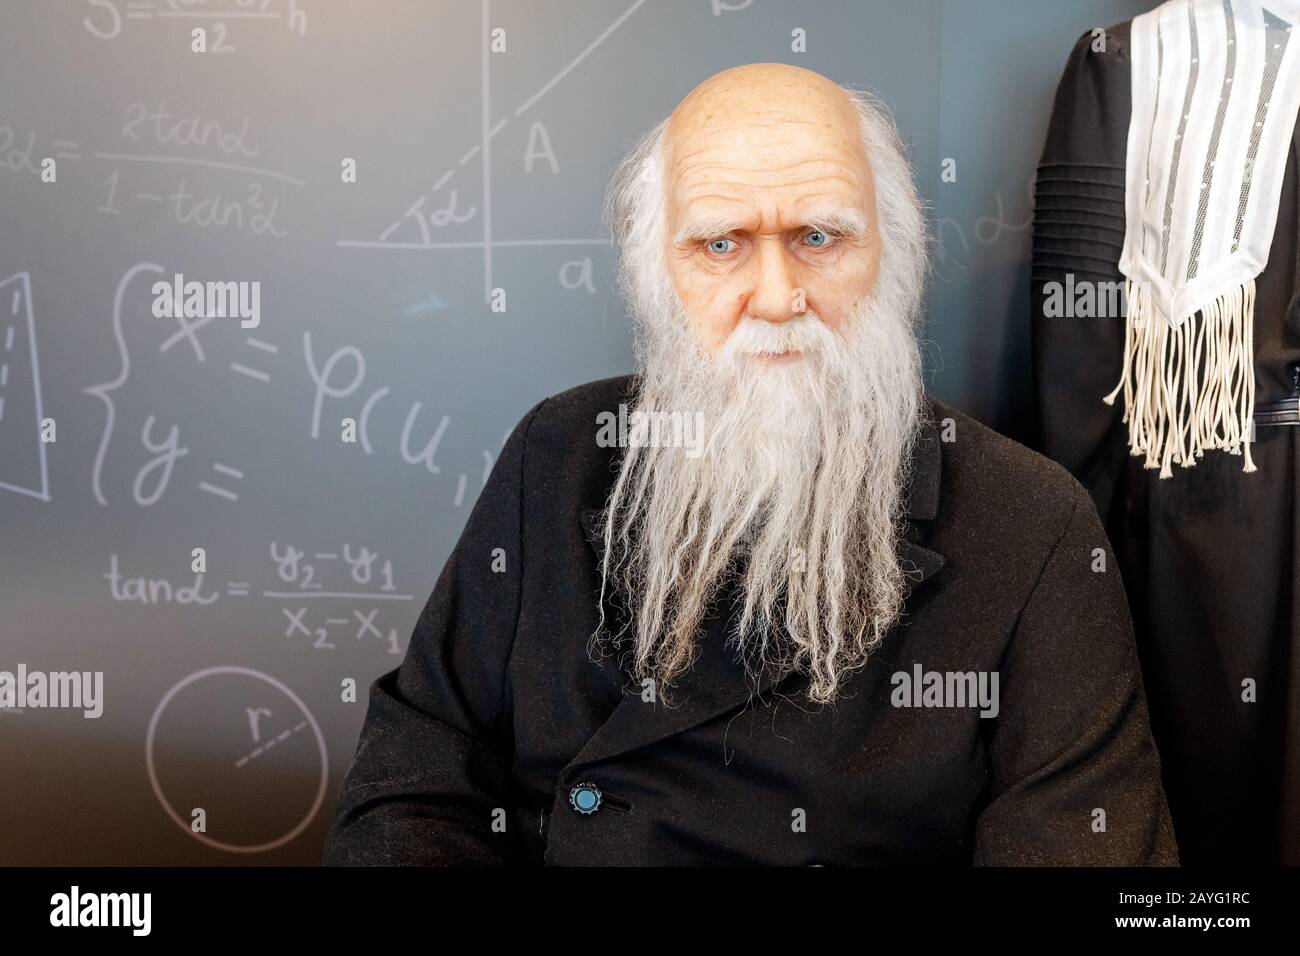 28 JULY 2018, BARCELONA, SPAIN: the wax figure of Mendeleev in Cosmocaixa science museum Stock Photo